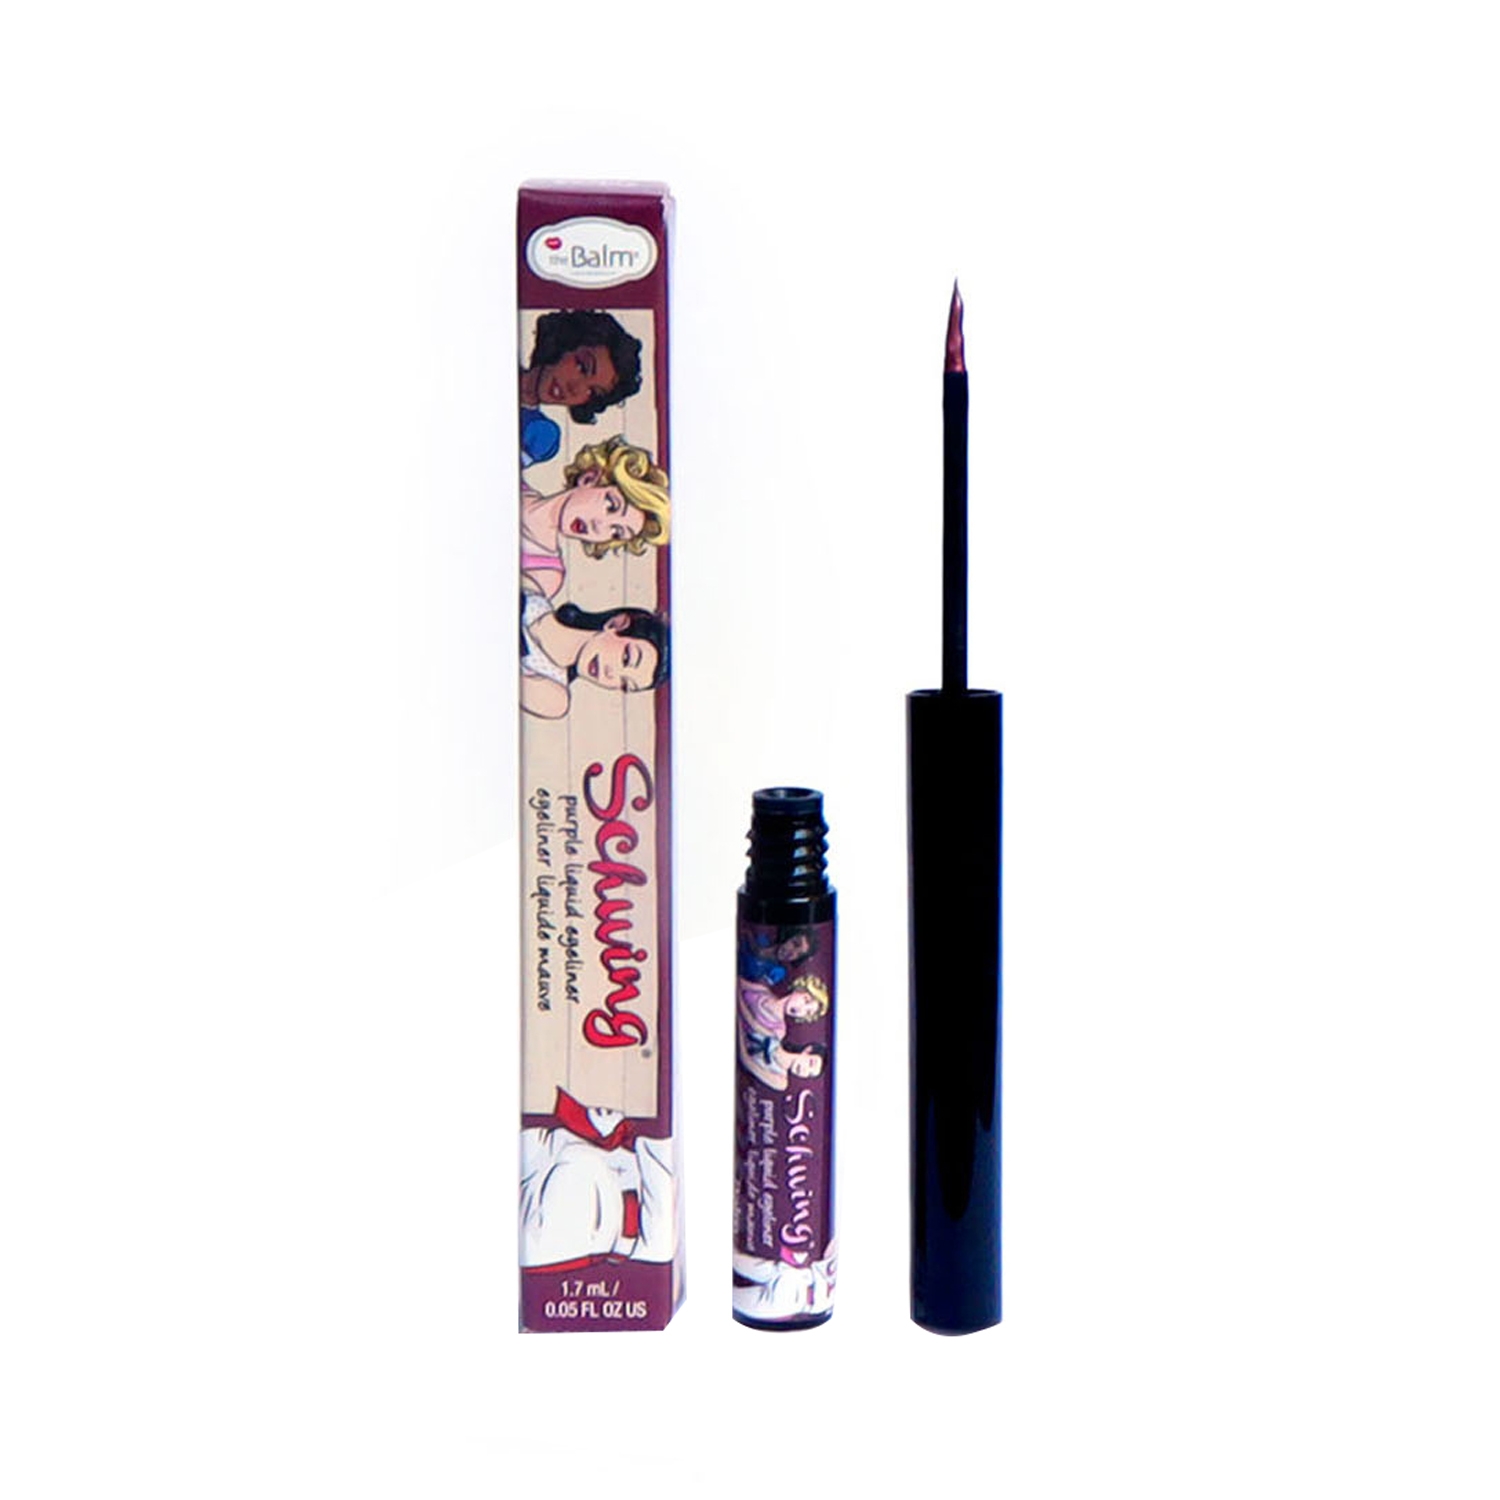 theBalm Cosmetics Schwing Liquid Eyeliner - Purple (1.7ml)